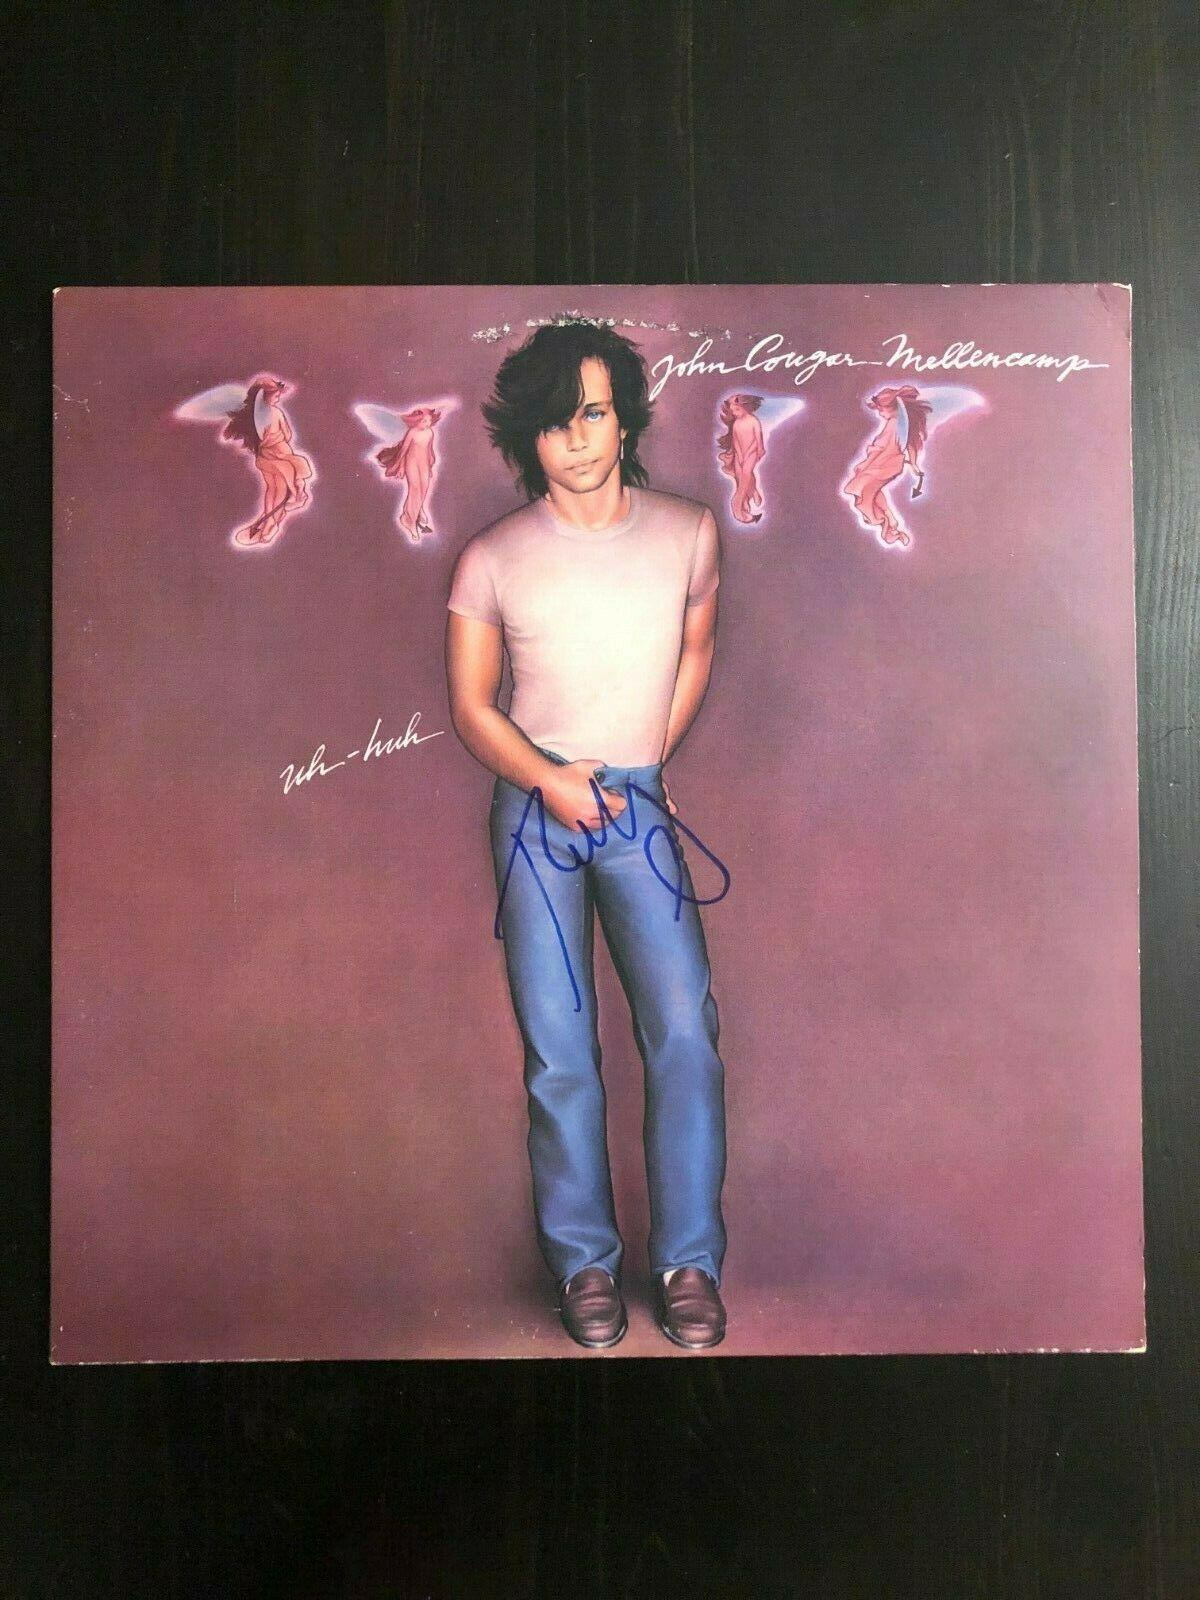 JOHN COUGAR MELLENCAMP - UH-HUH LP VINYL RECORD ALBUM | eBay